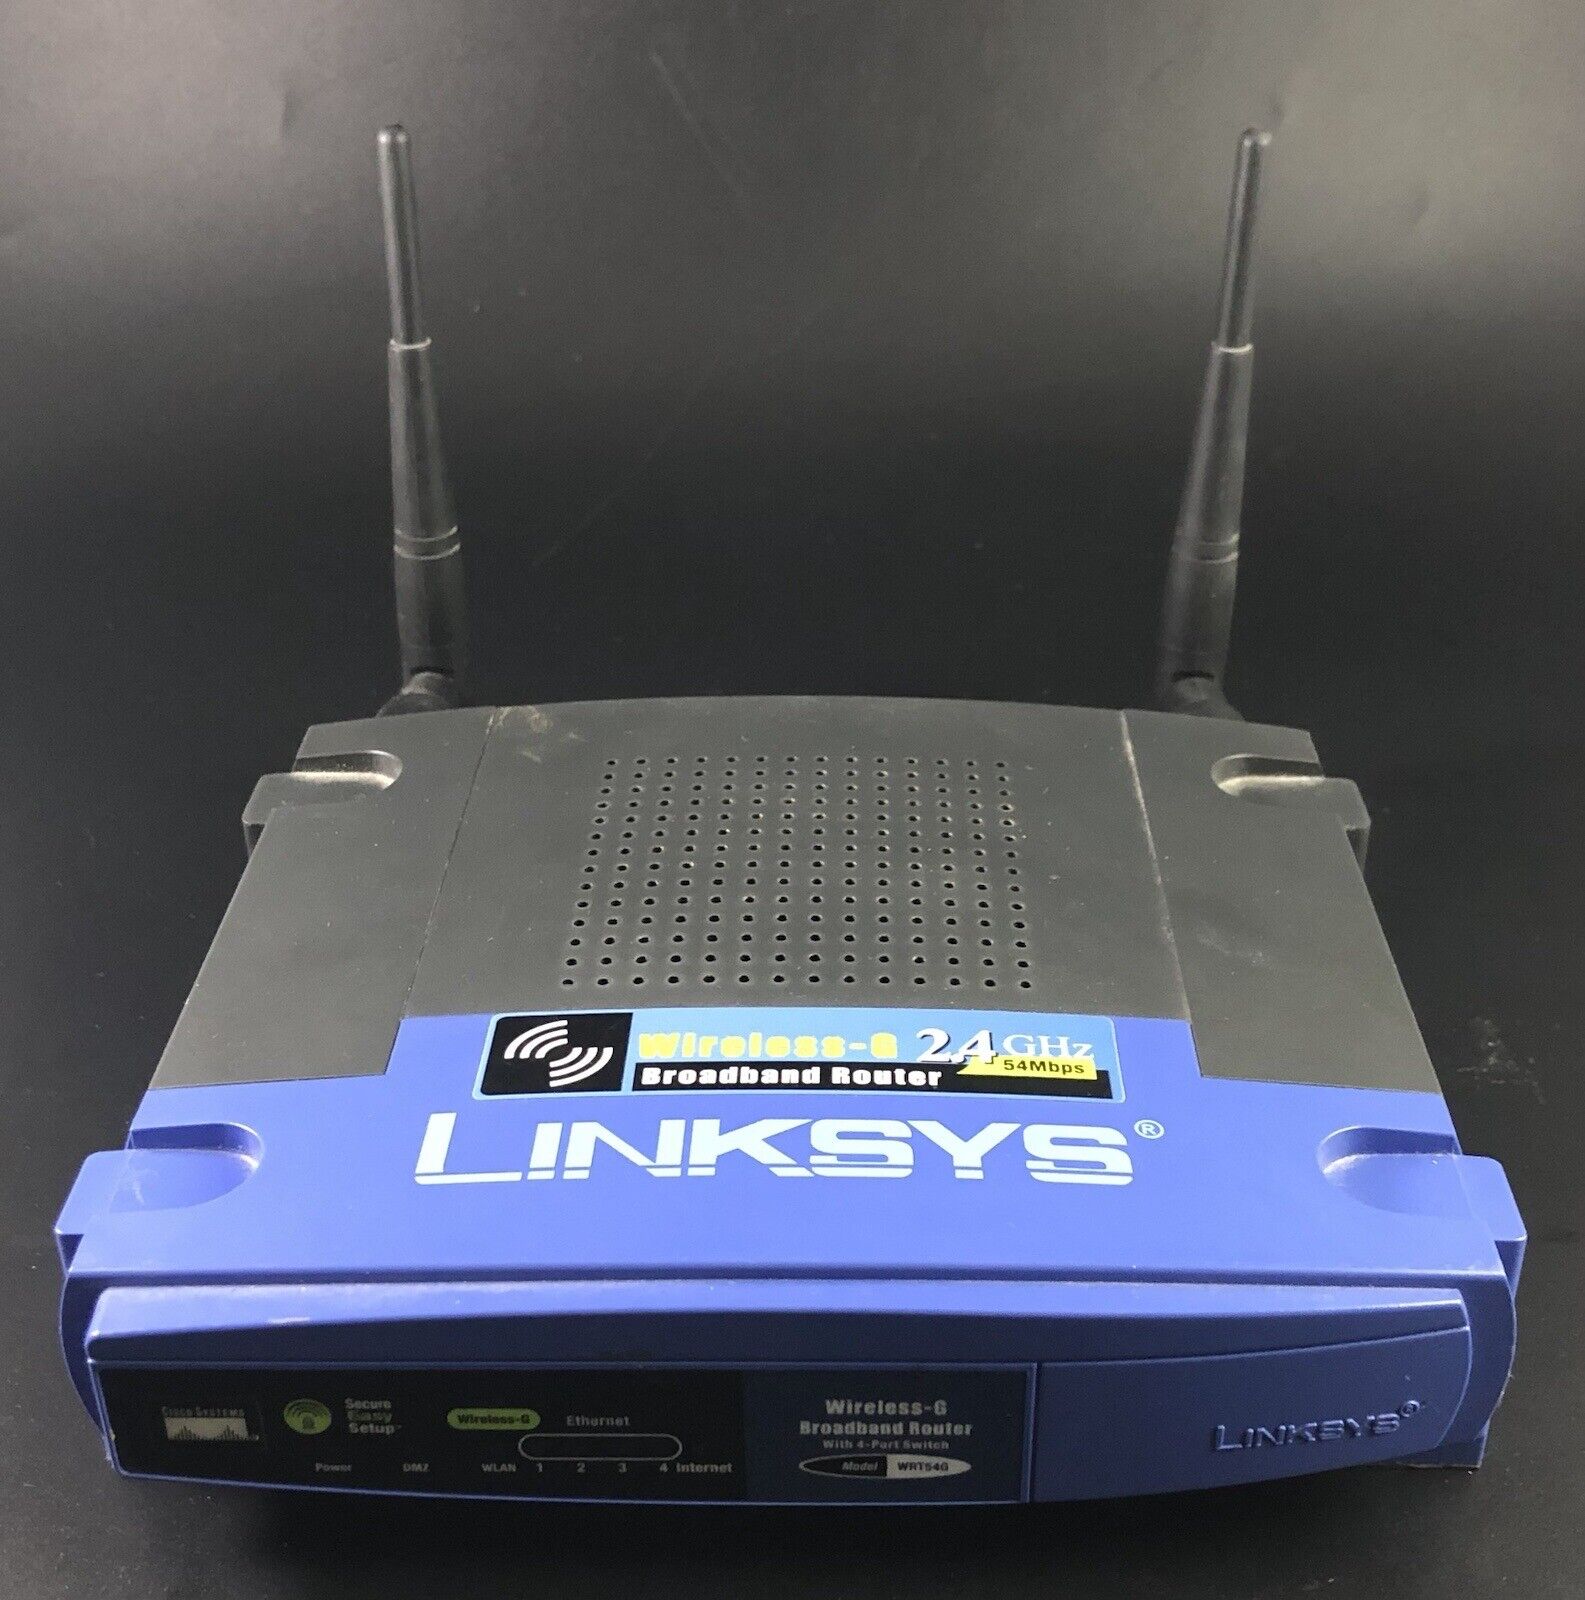 Linksys WRT54G Ver 6 Wireless G 2.4 GHz Broadband Router  4-Port 54 Mbps Vg8